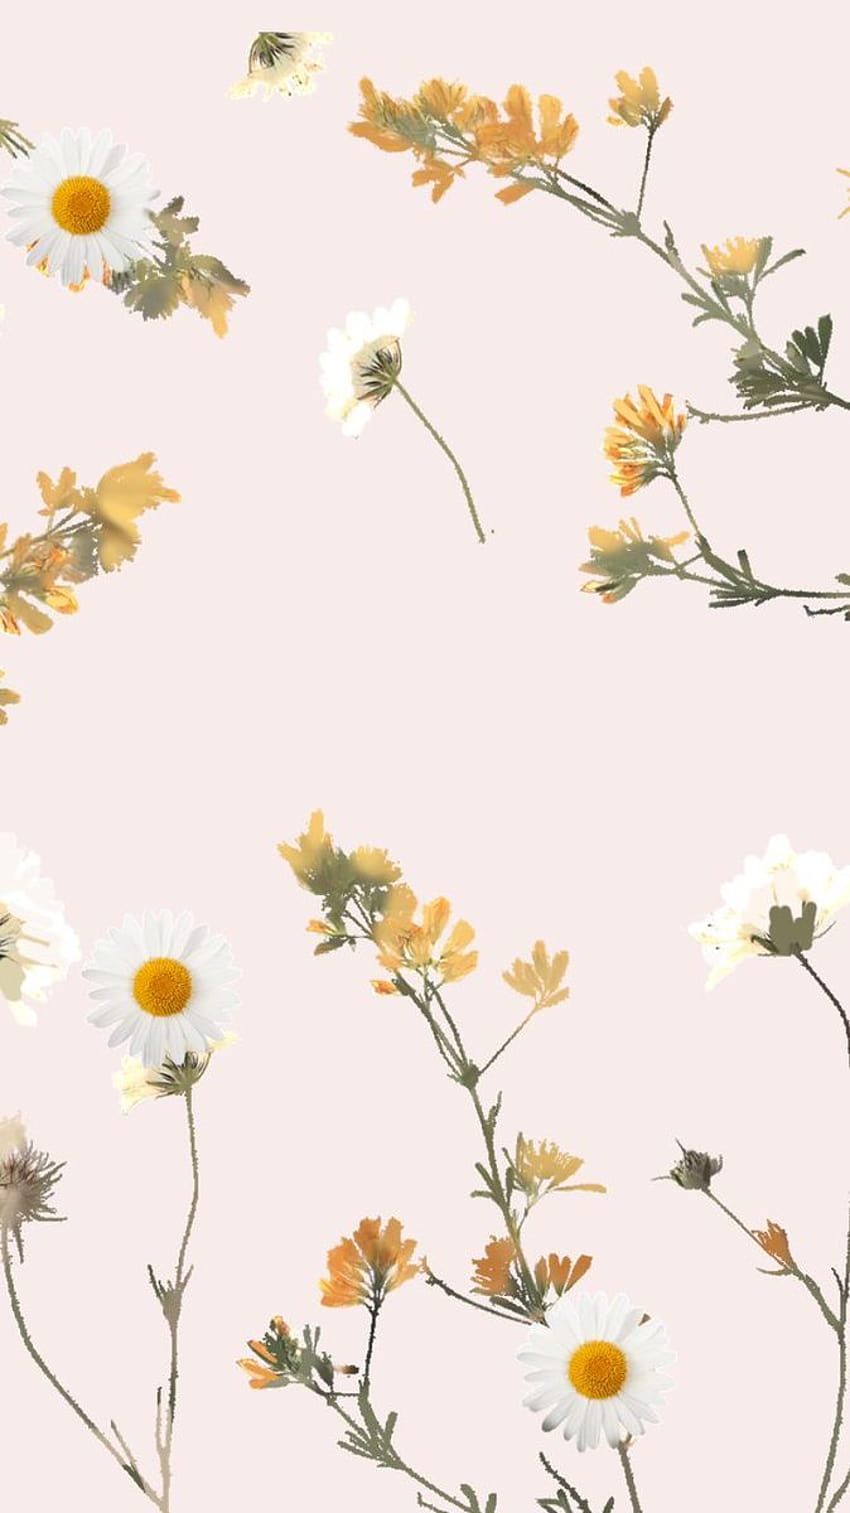 80+ Beautiful Flower Wallpaper For iPhone | IdeasToKnow